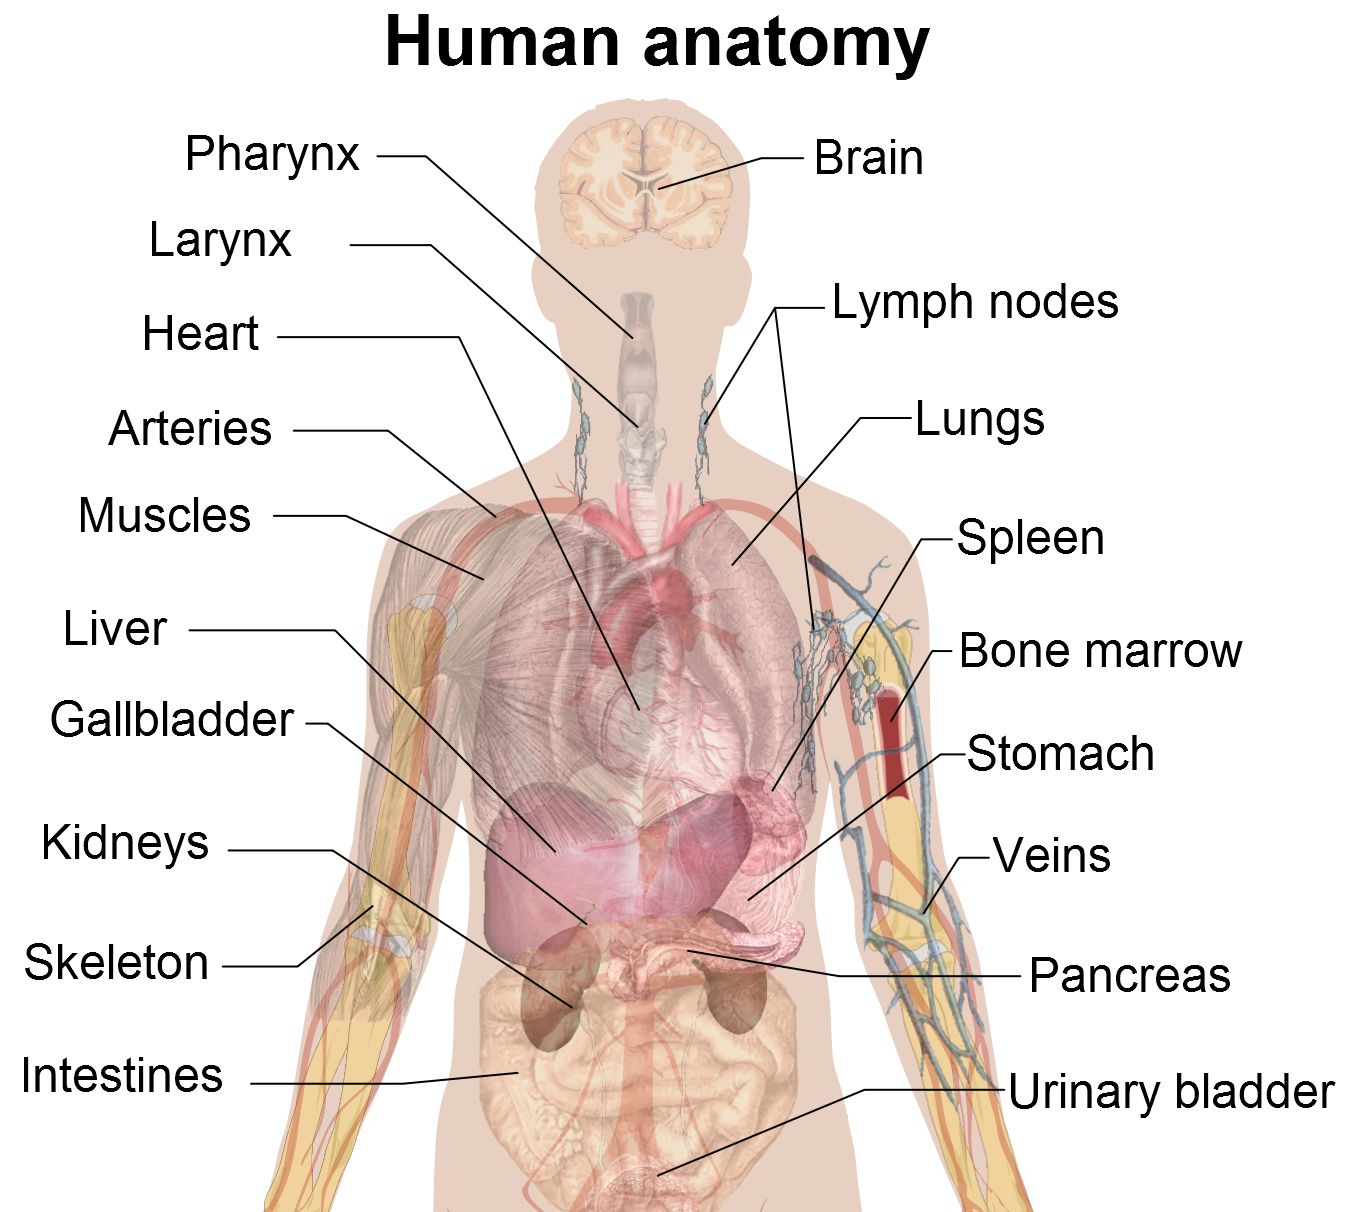 Human Body Diagram Kidney In Body Diagram Kidney Location Human Body Diagram Anatomy